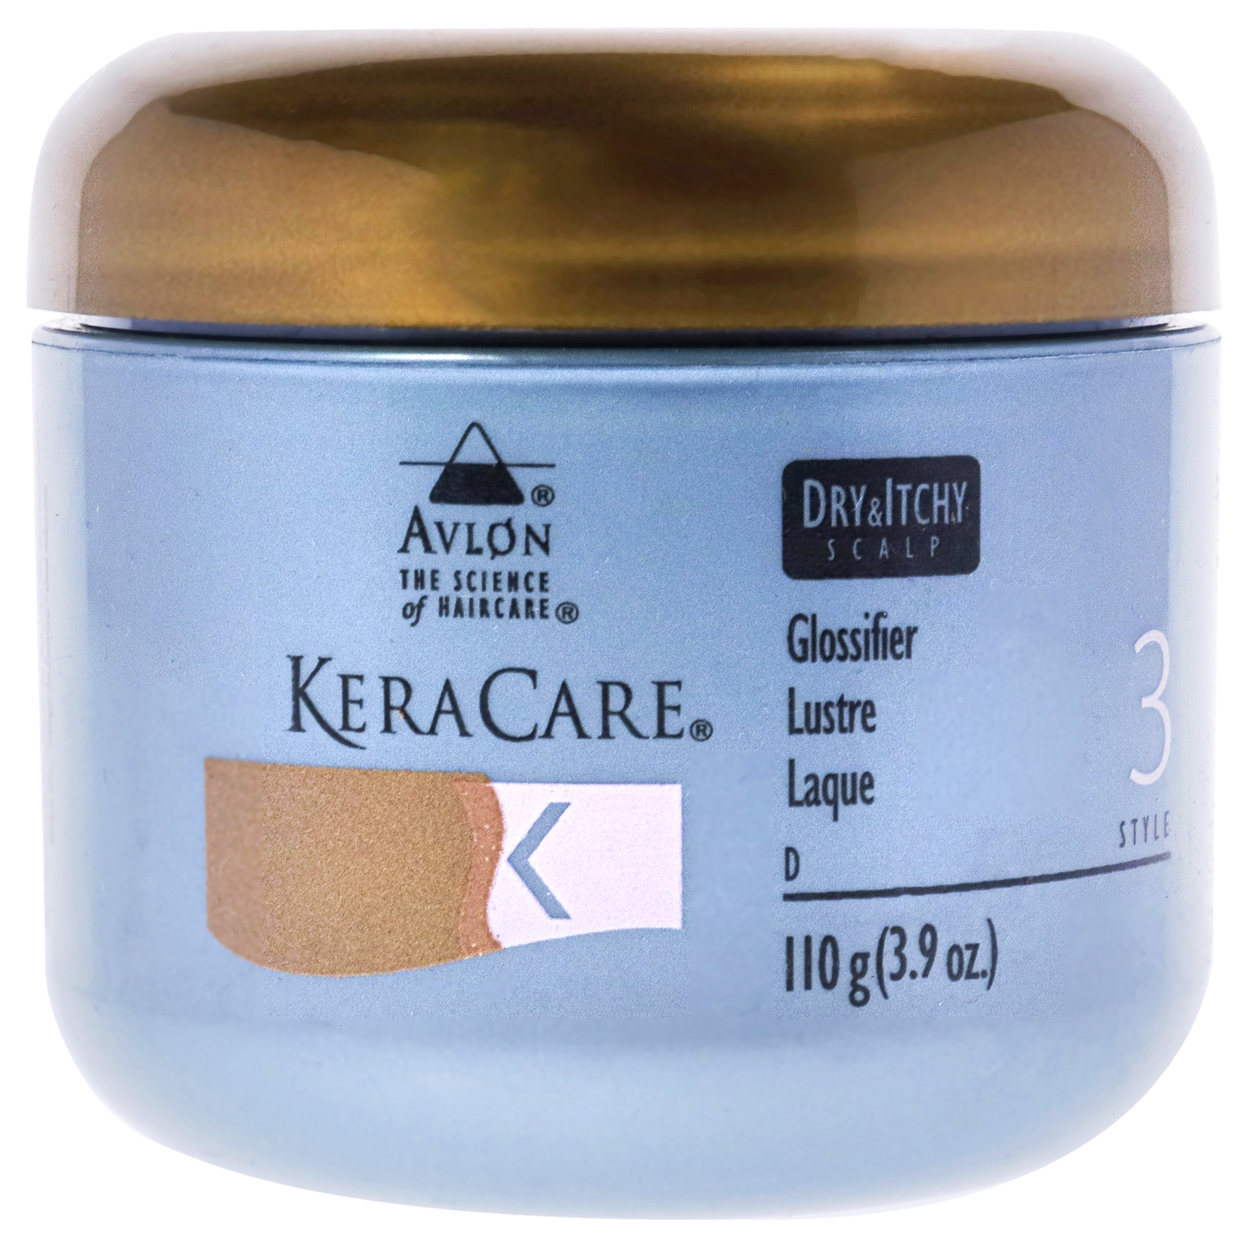 Avlon KeraCare Dry Itchy Scalp Glossifier 3.9 Oz